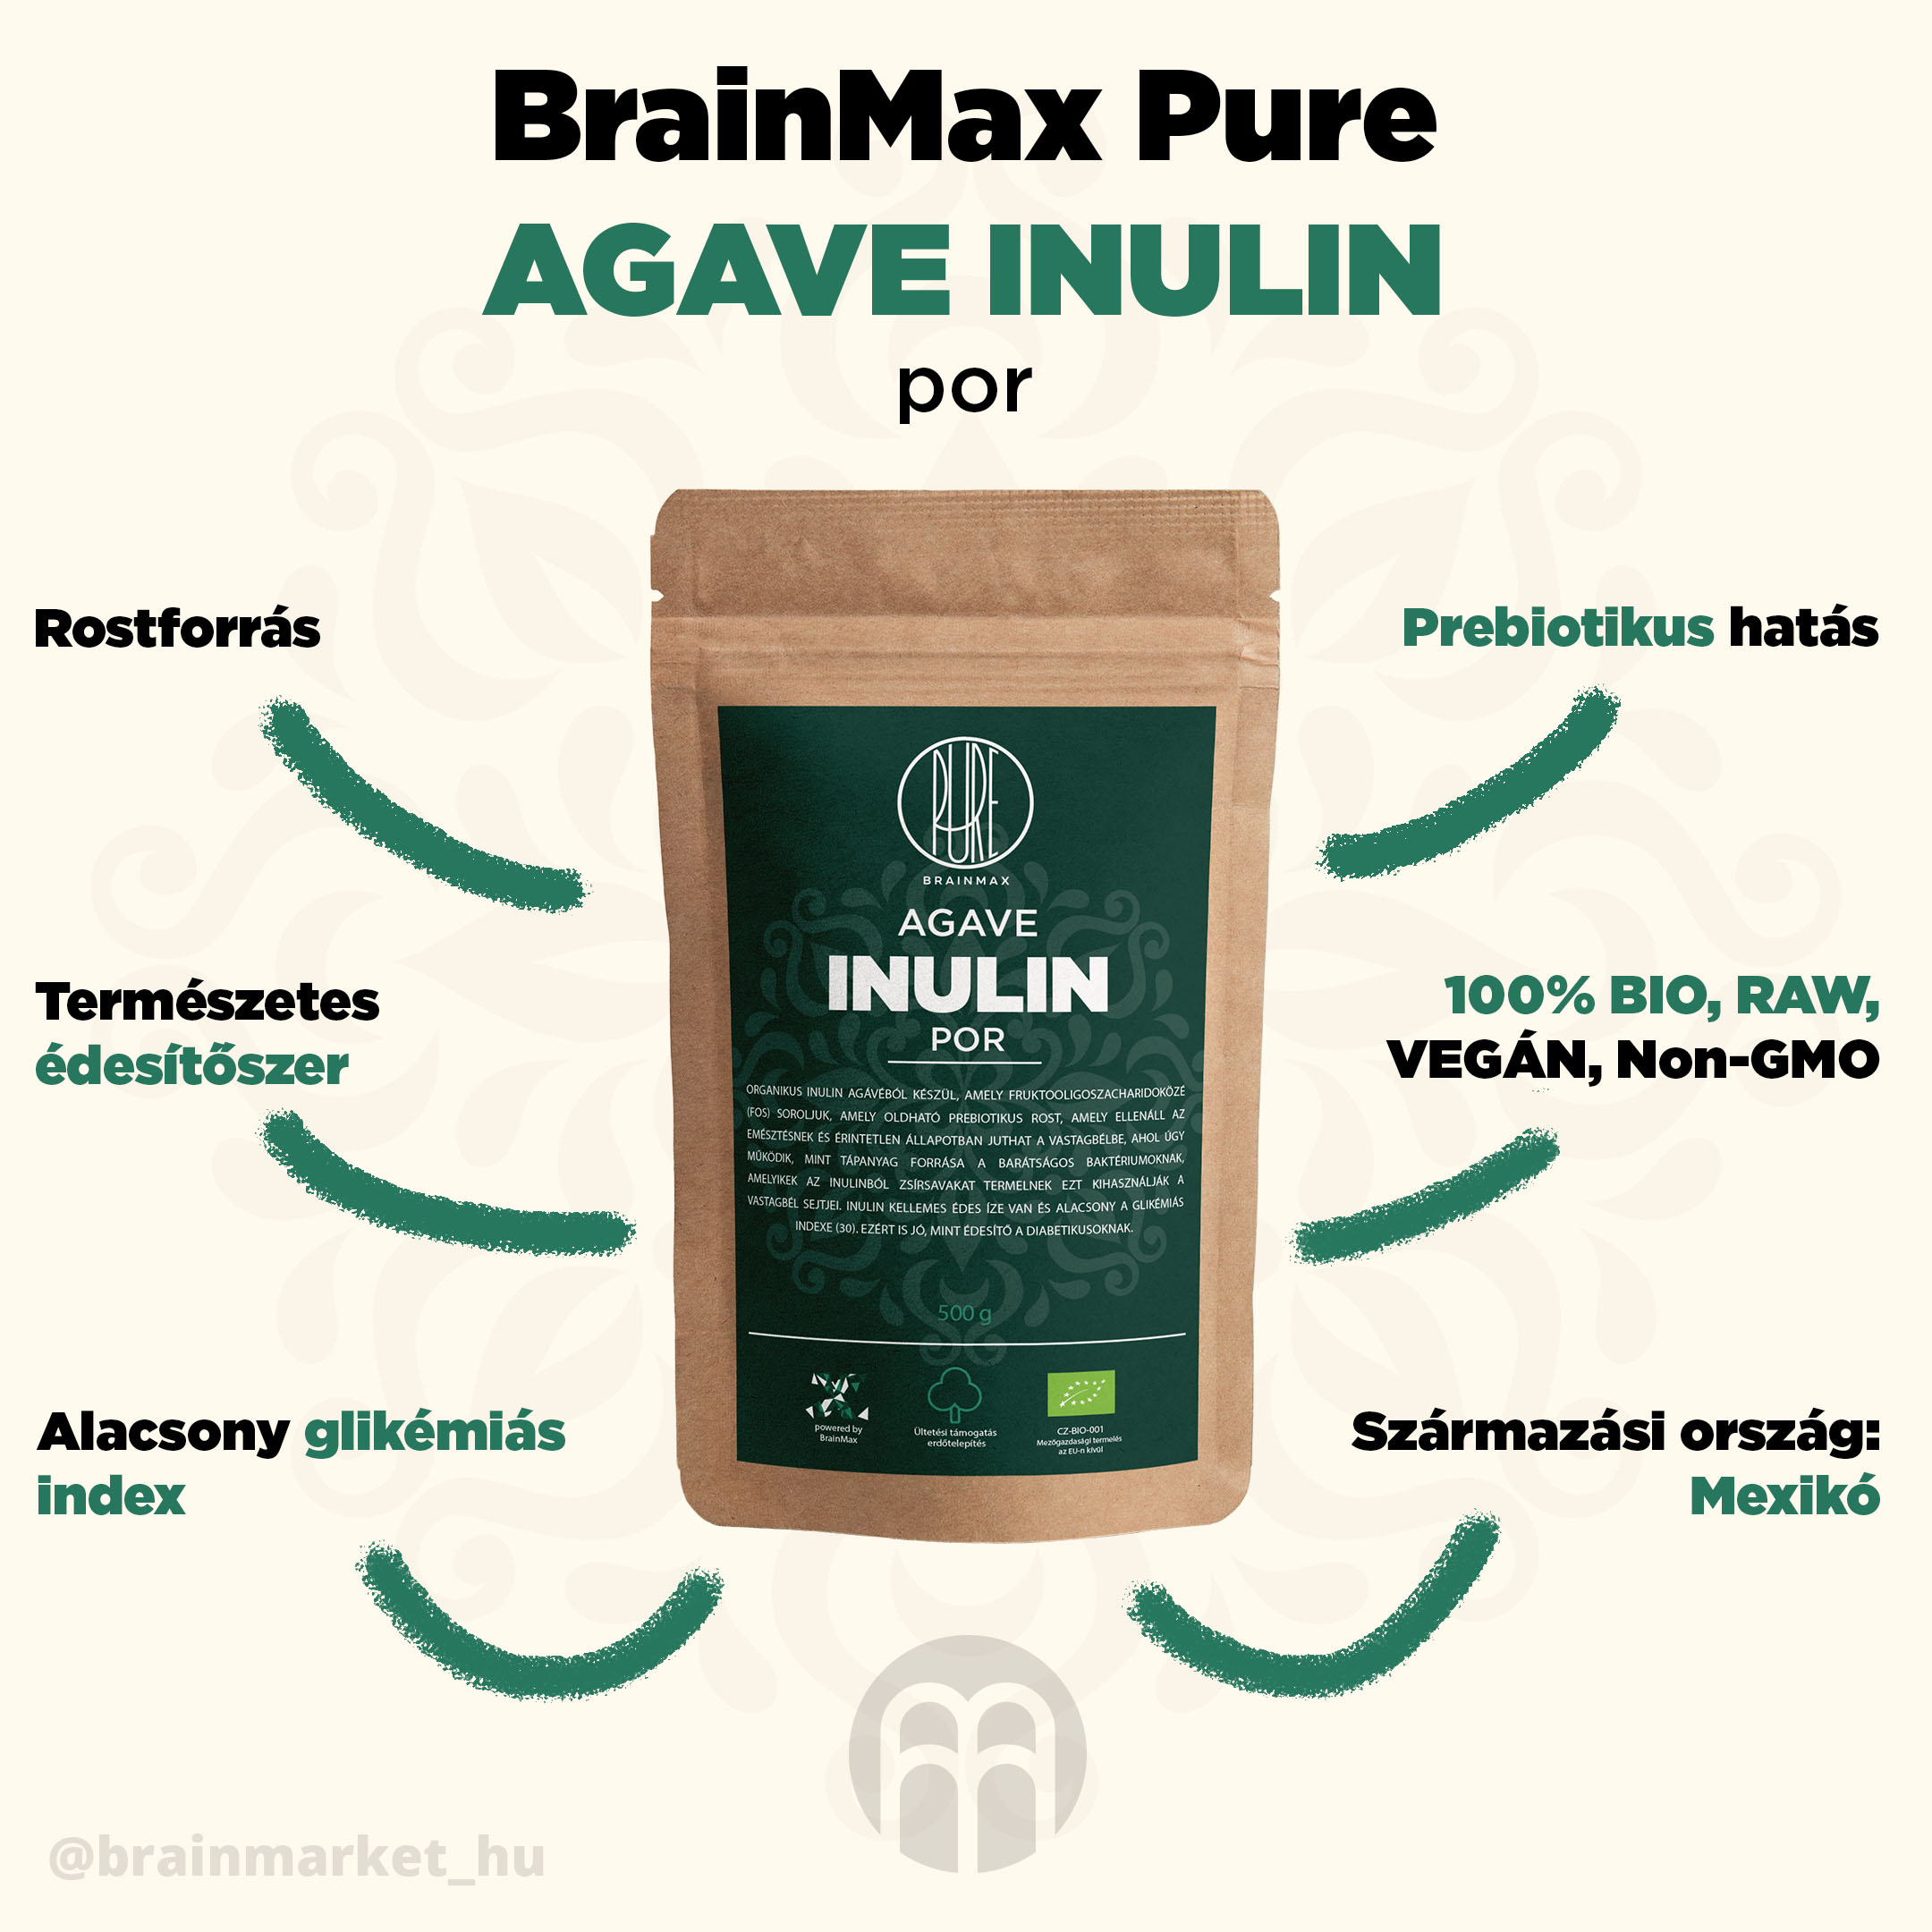 Agave inulin - tulajdonságai, előnyei